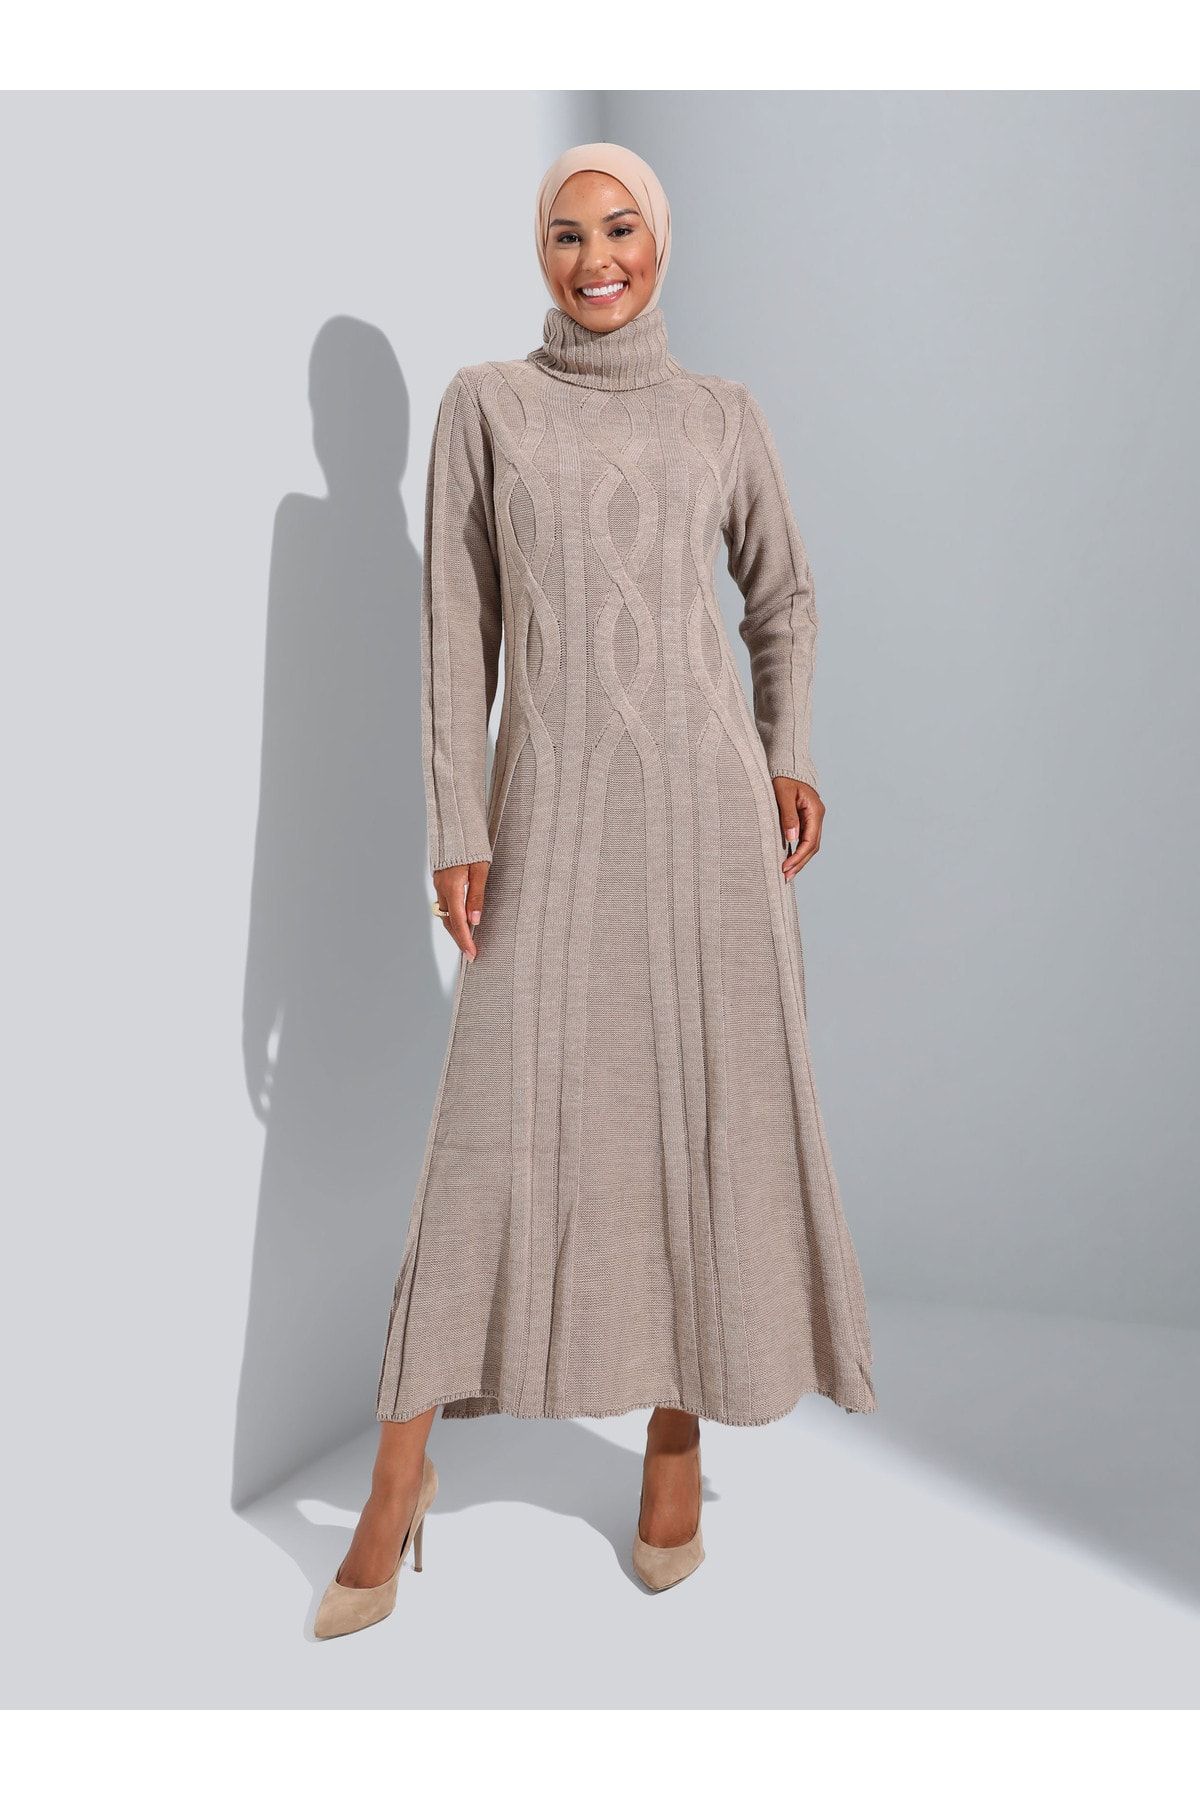 Refka Boğazlı Yaka Örgü Detaylı Triko Tesettür Elbise - Vizon - Refka Woman